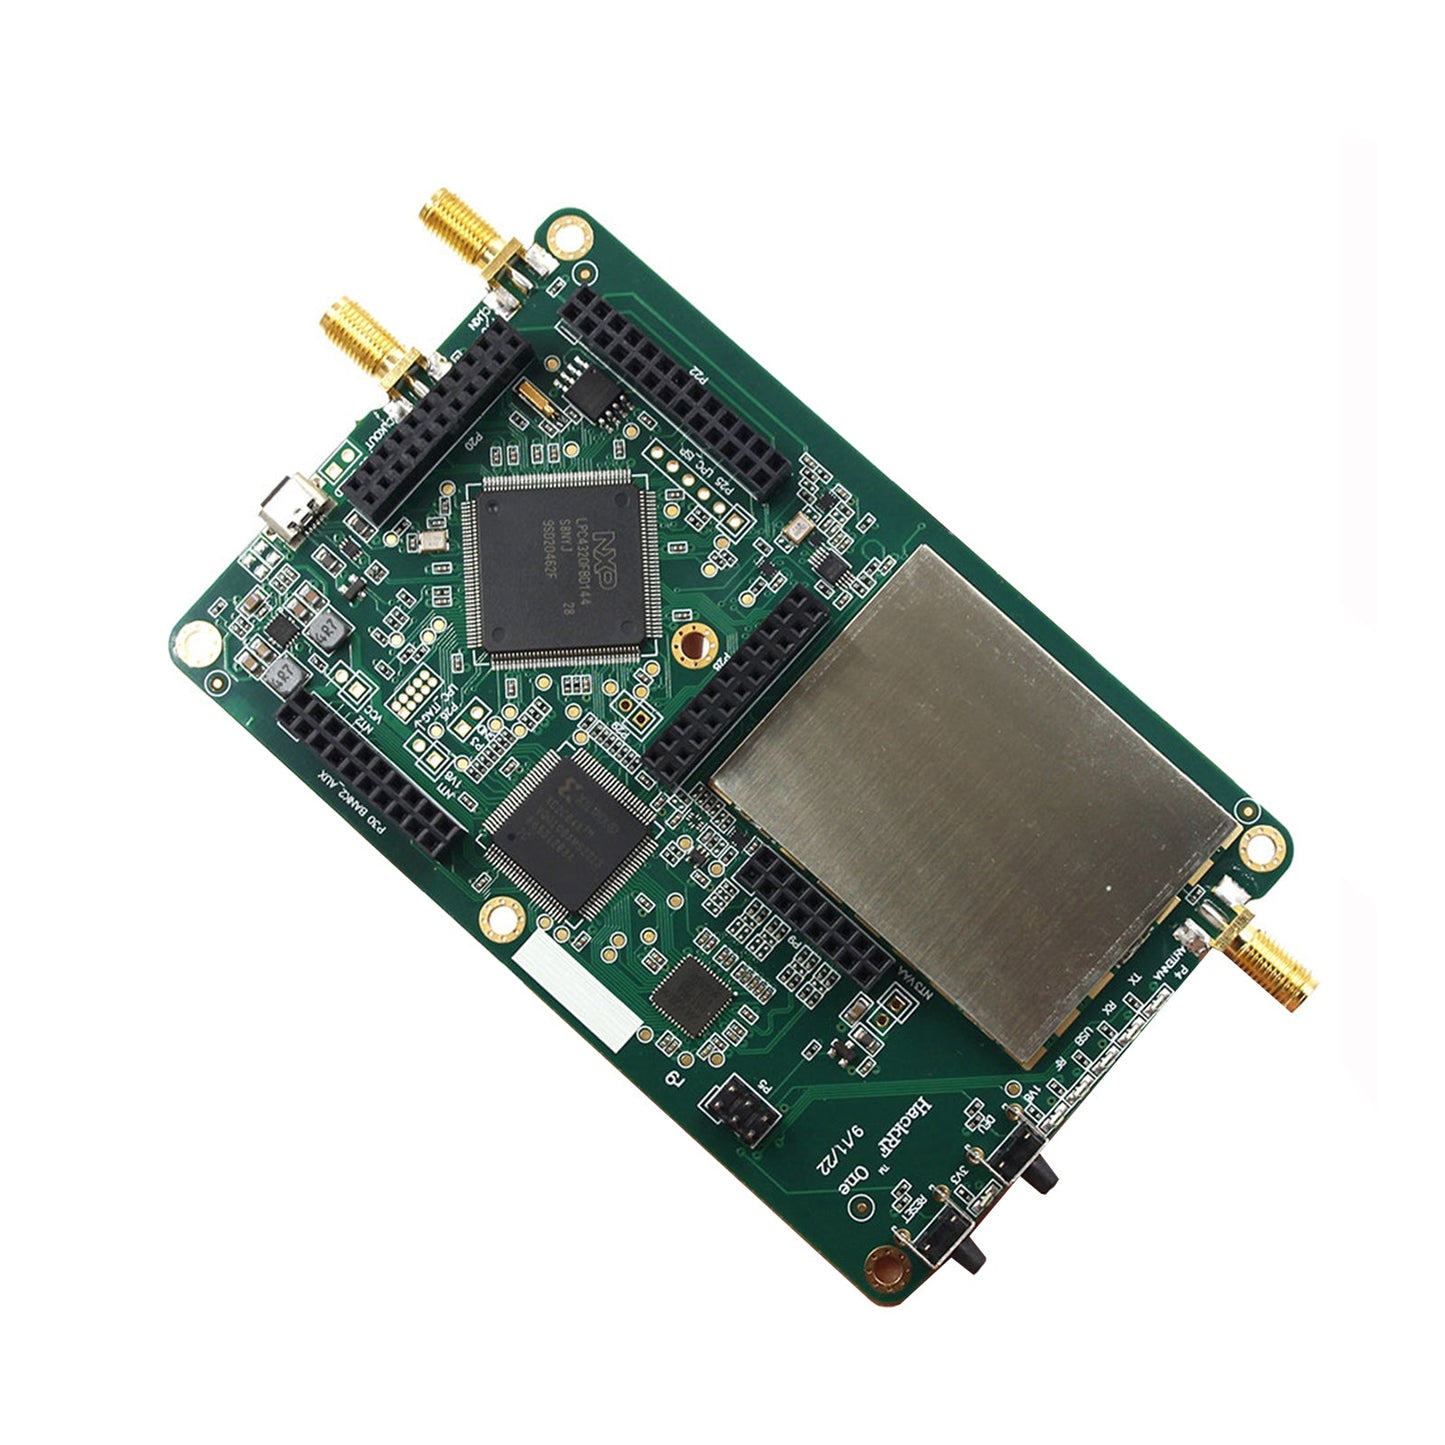 Upgraded HackRF One V1.7.3 Portapack H2 1MHz-6GHz SDR Software Defined Wireless